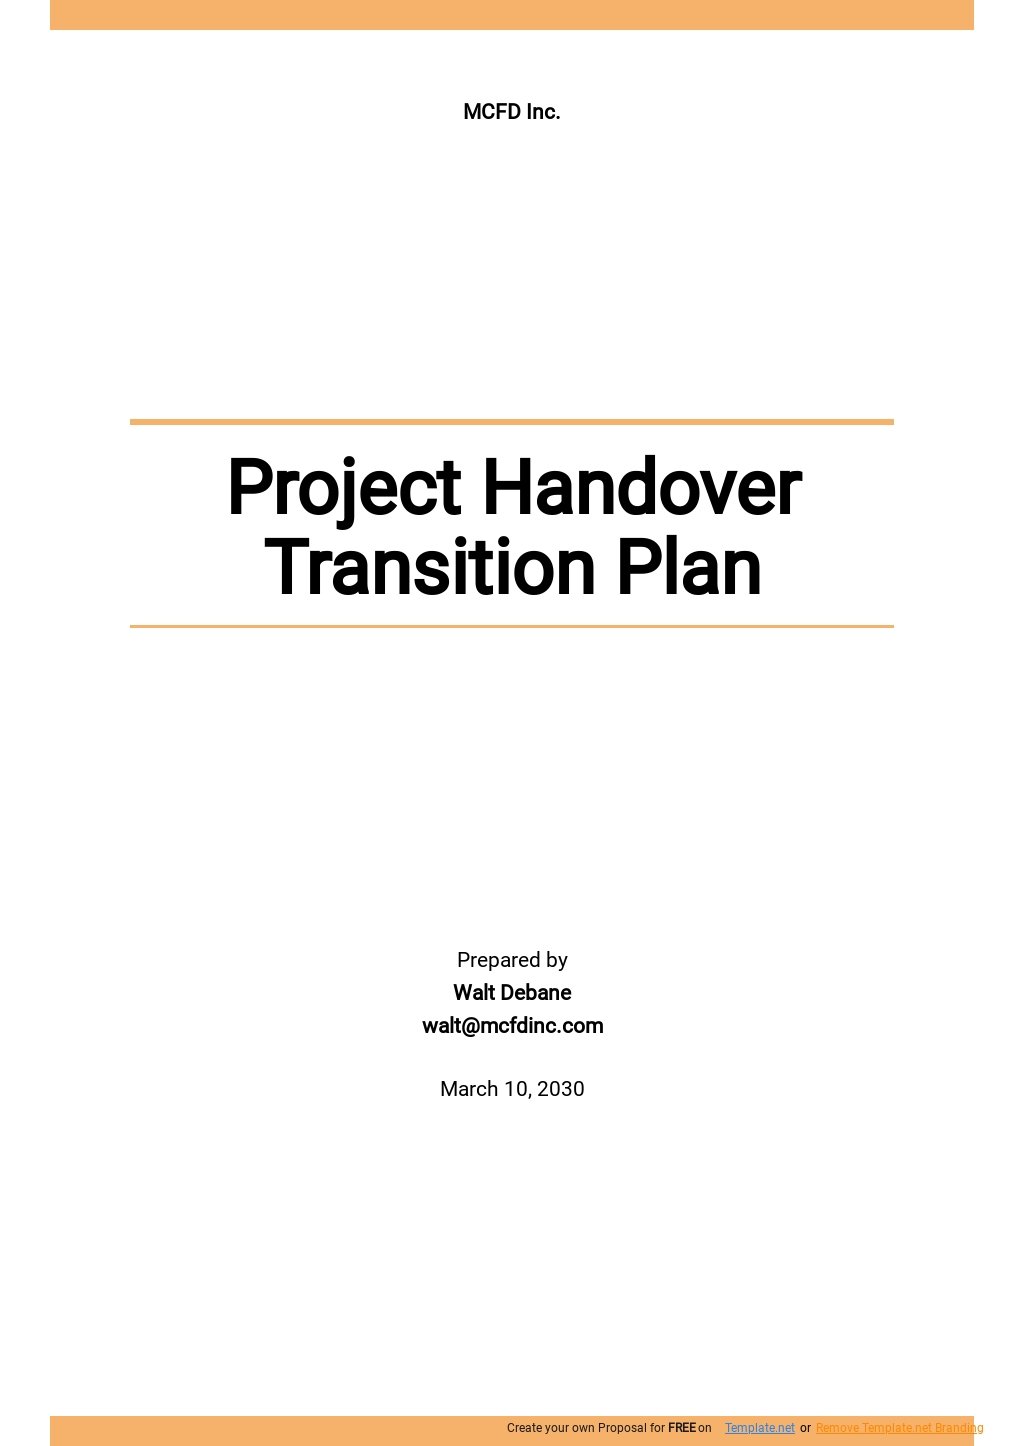 Project Handover Transition Plan Template.jpe